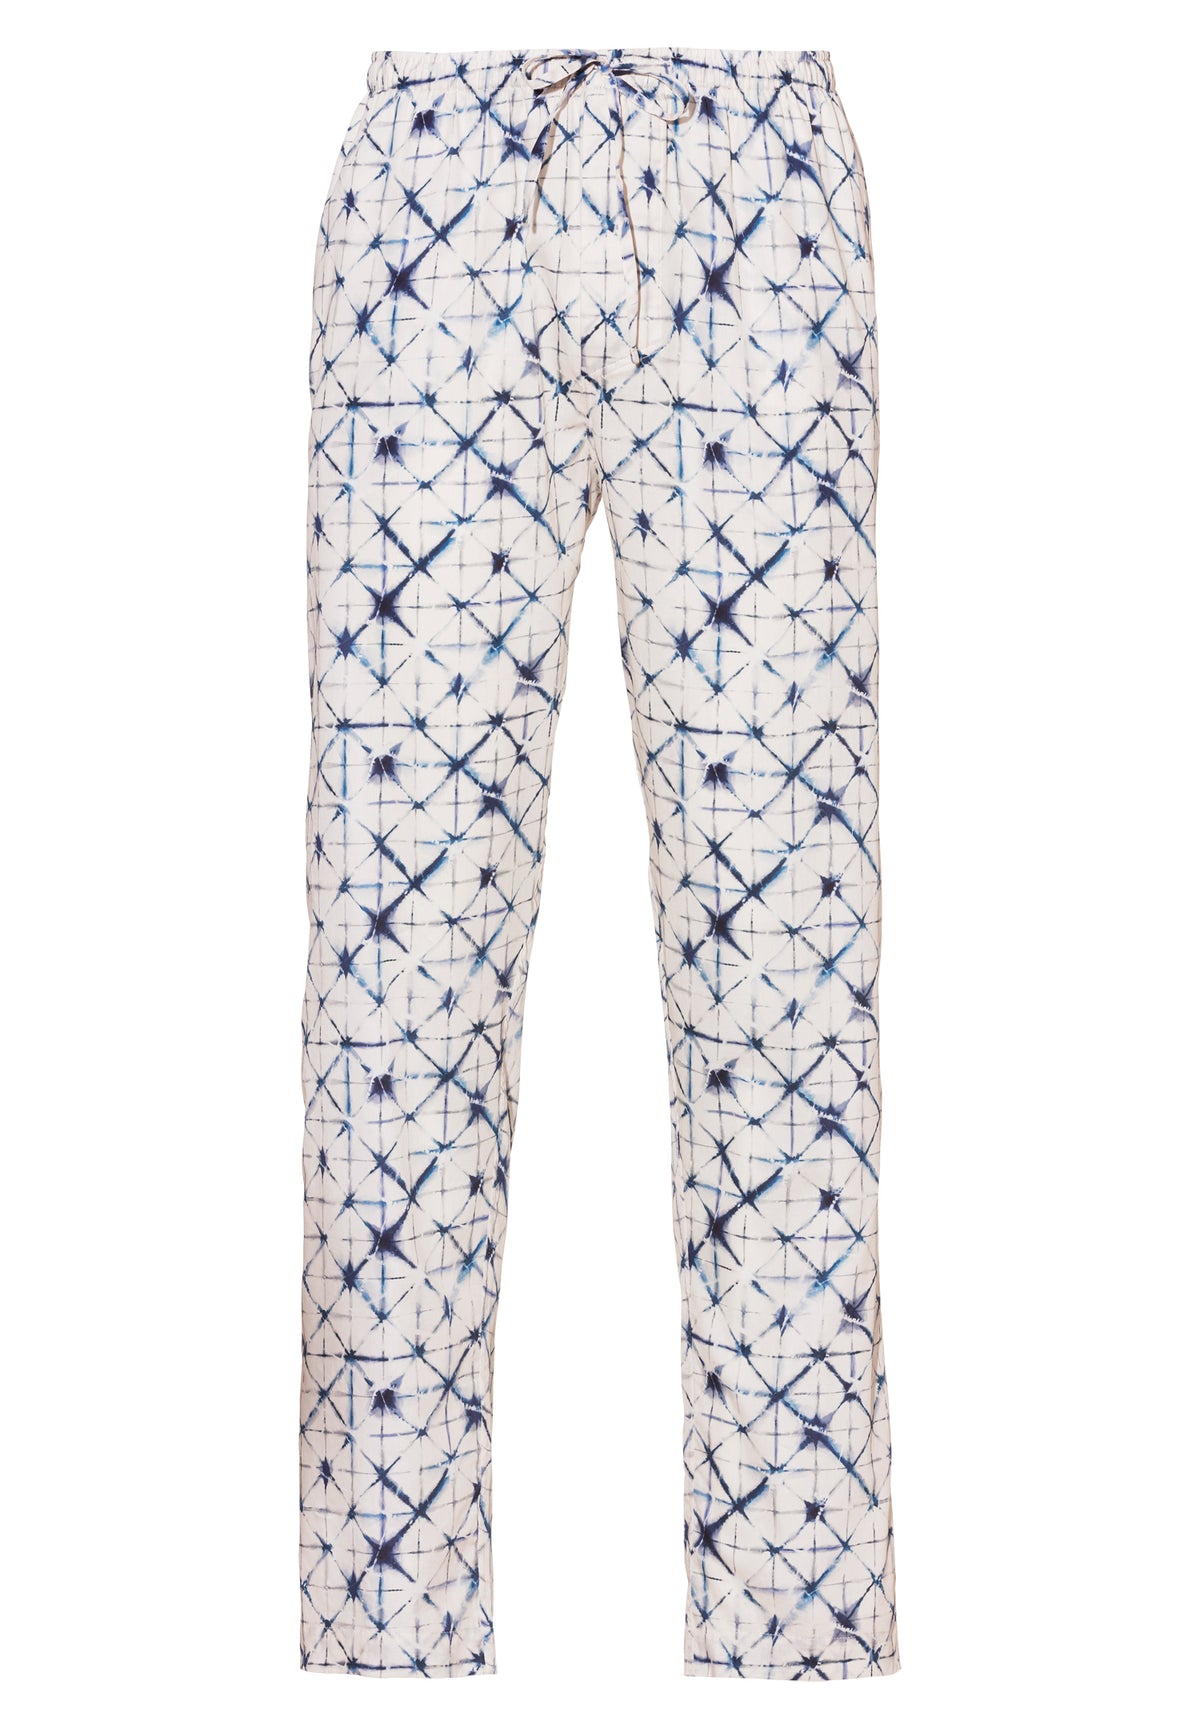 Cotton Sateen Print | Pants Long - geo-batic blue